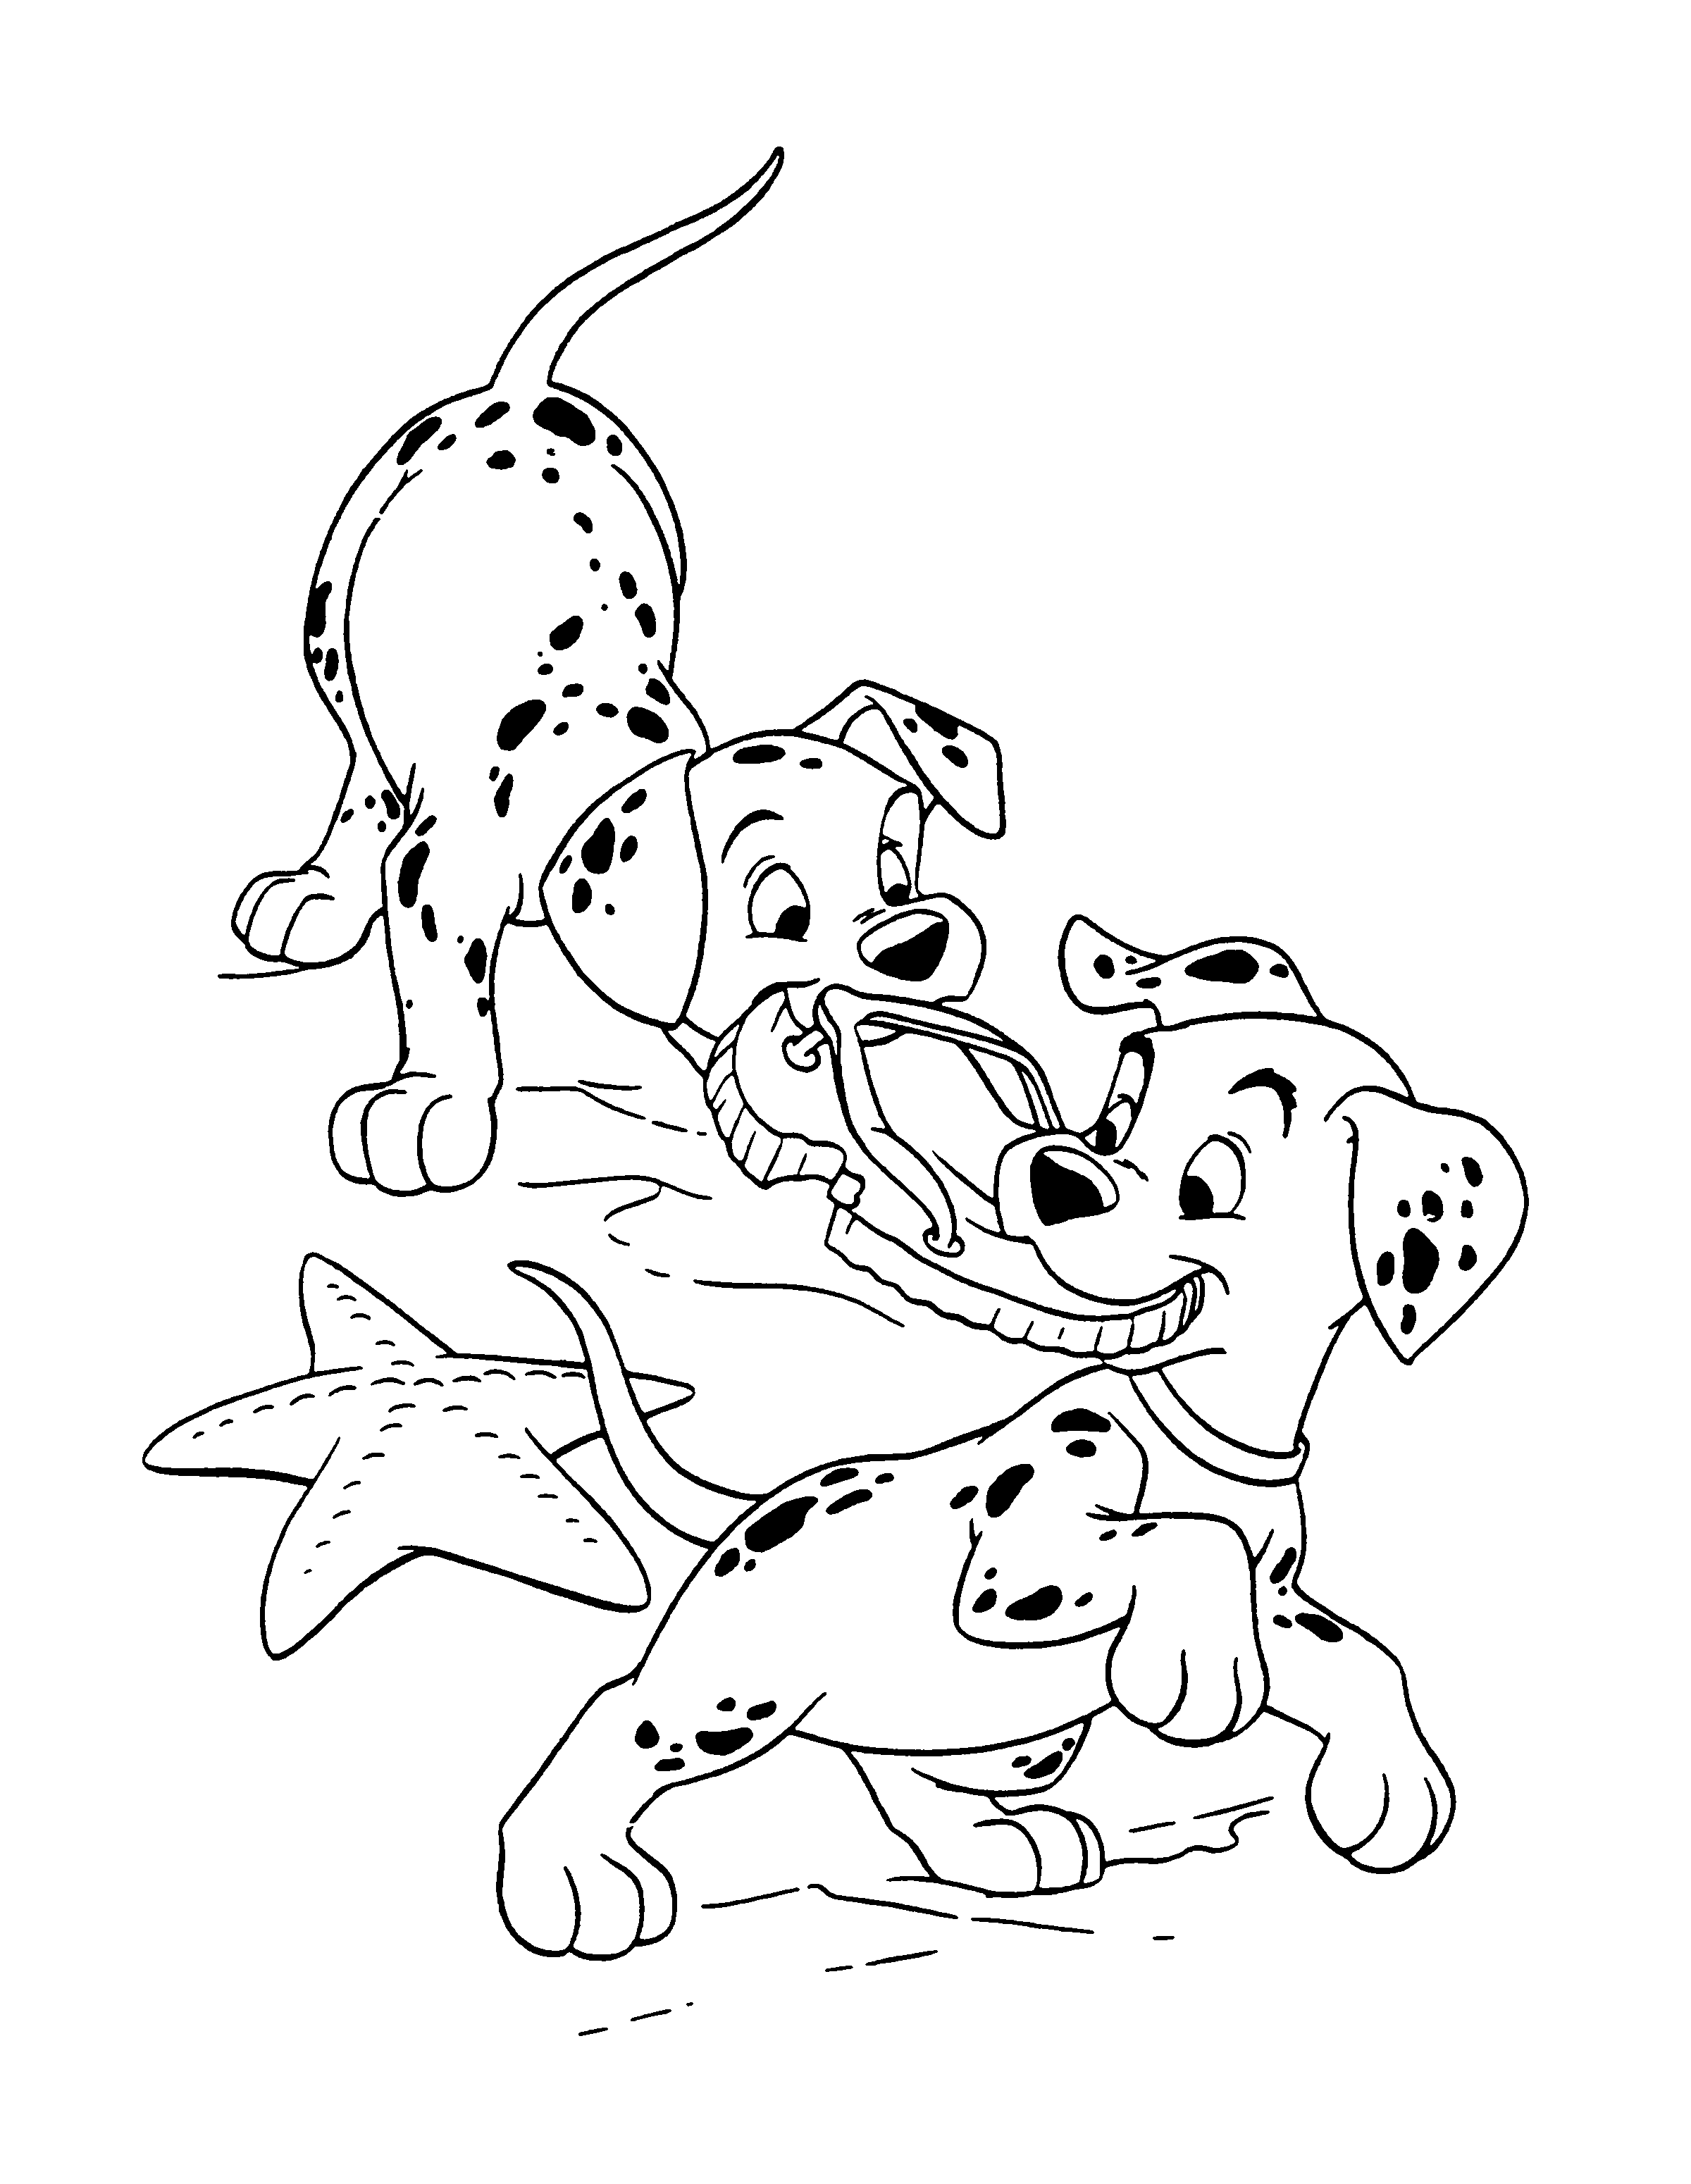 102 Dalmatians Coloring Pages Cartoons 102 dalmatiner 7ught Printable 2020 0124 Coloring4free